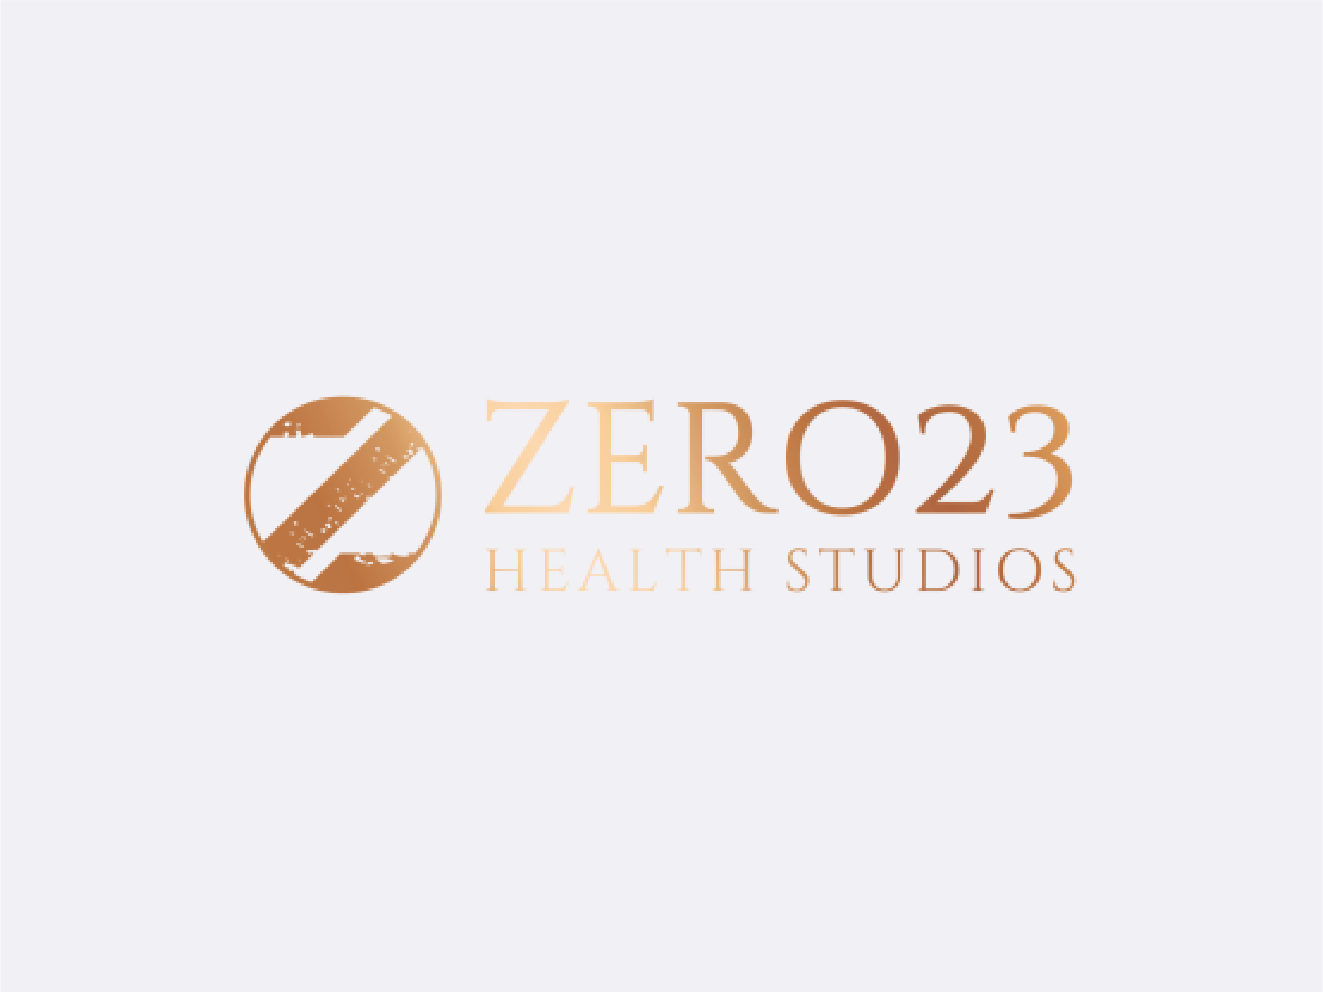 ZERO23 Health Studios